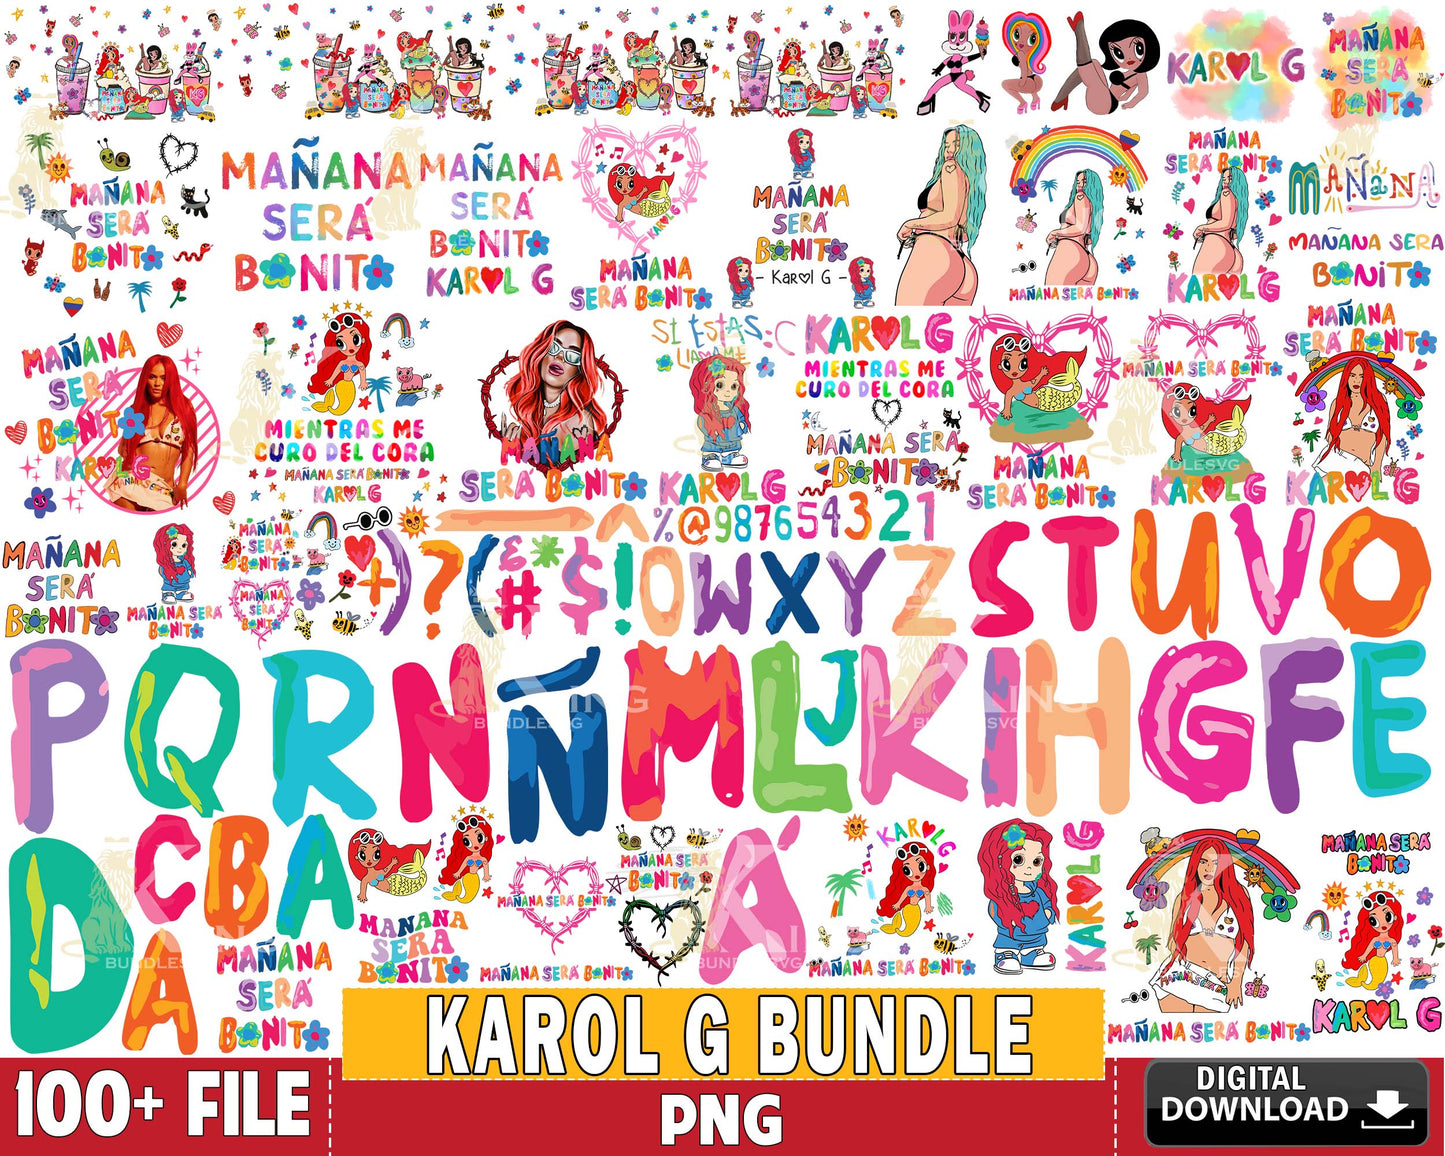 100+ file Karol G Mañana Sera Bonito PNG,Karol G Png bundle  , for Cricut, Silhouette, digital download, file cut